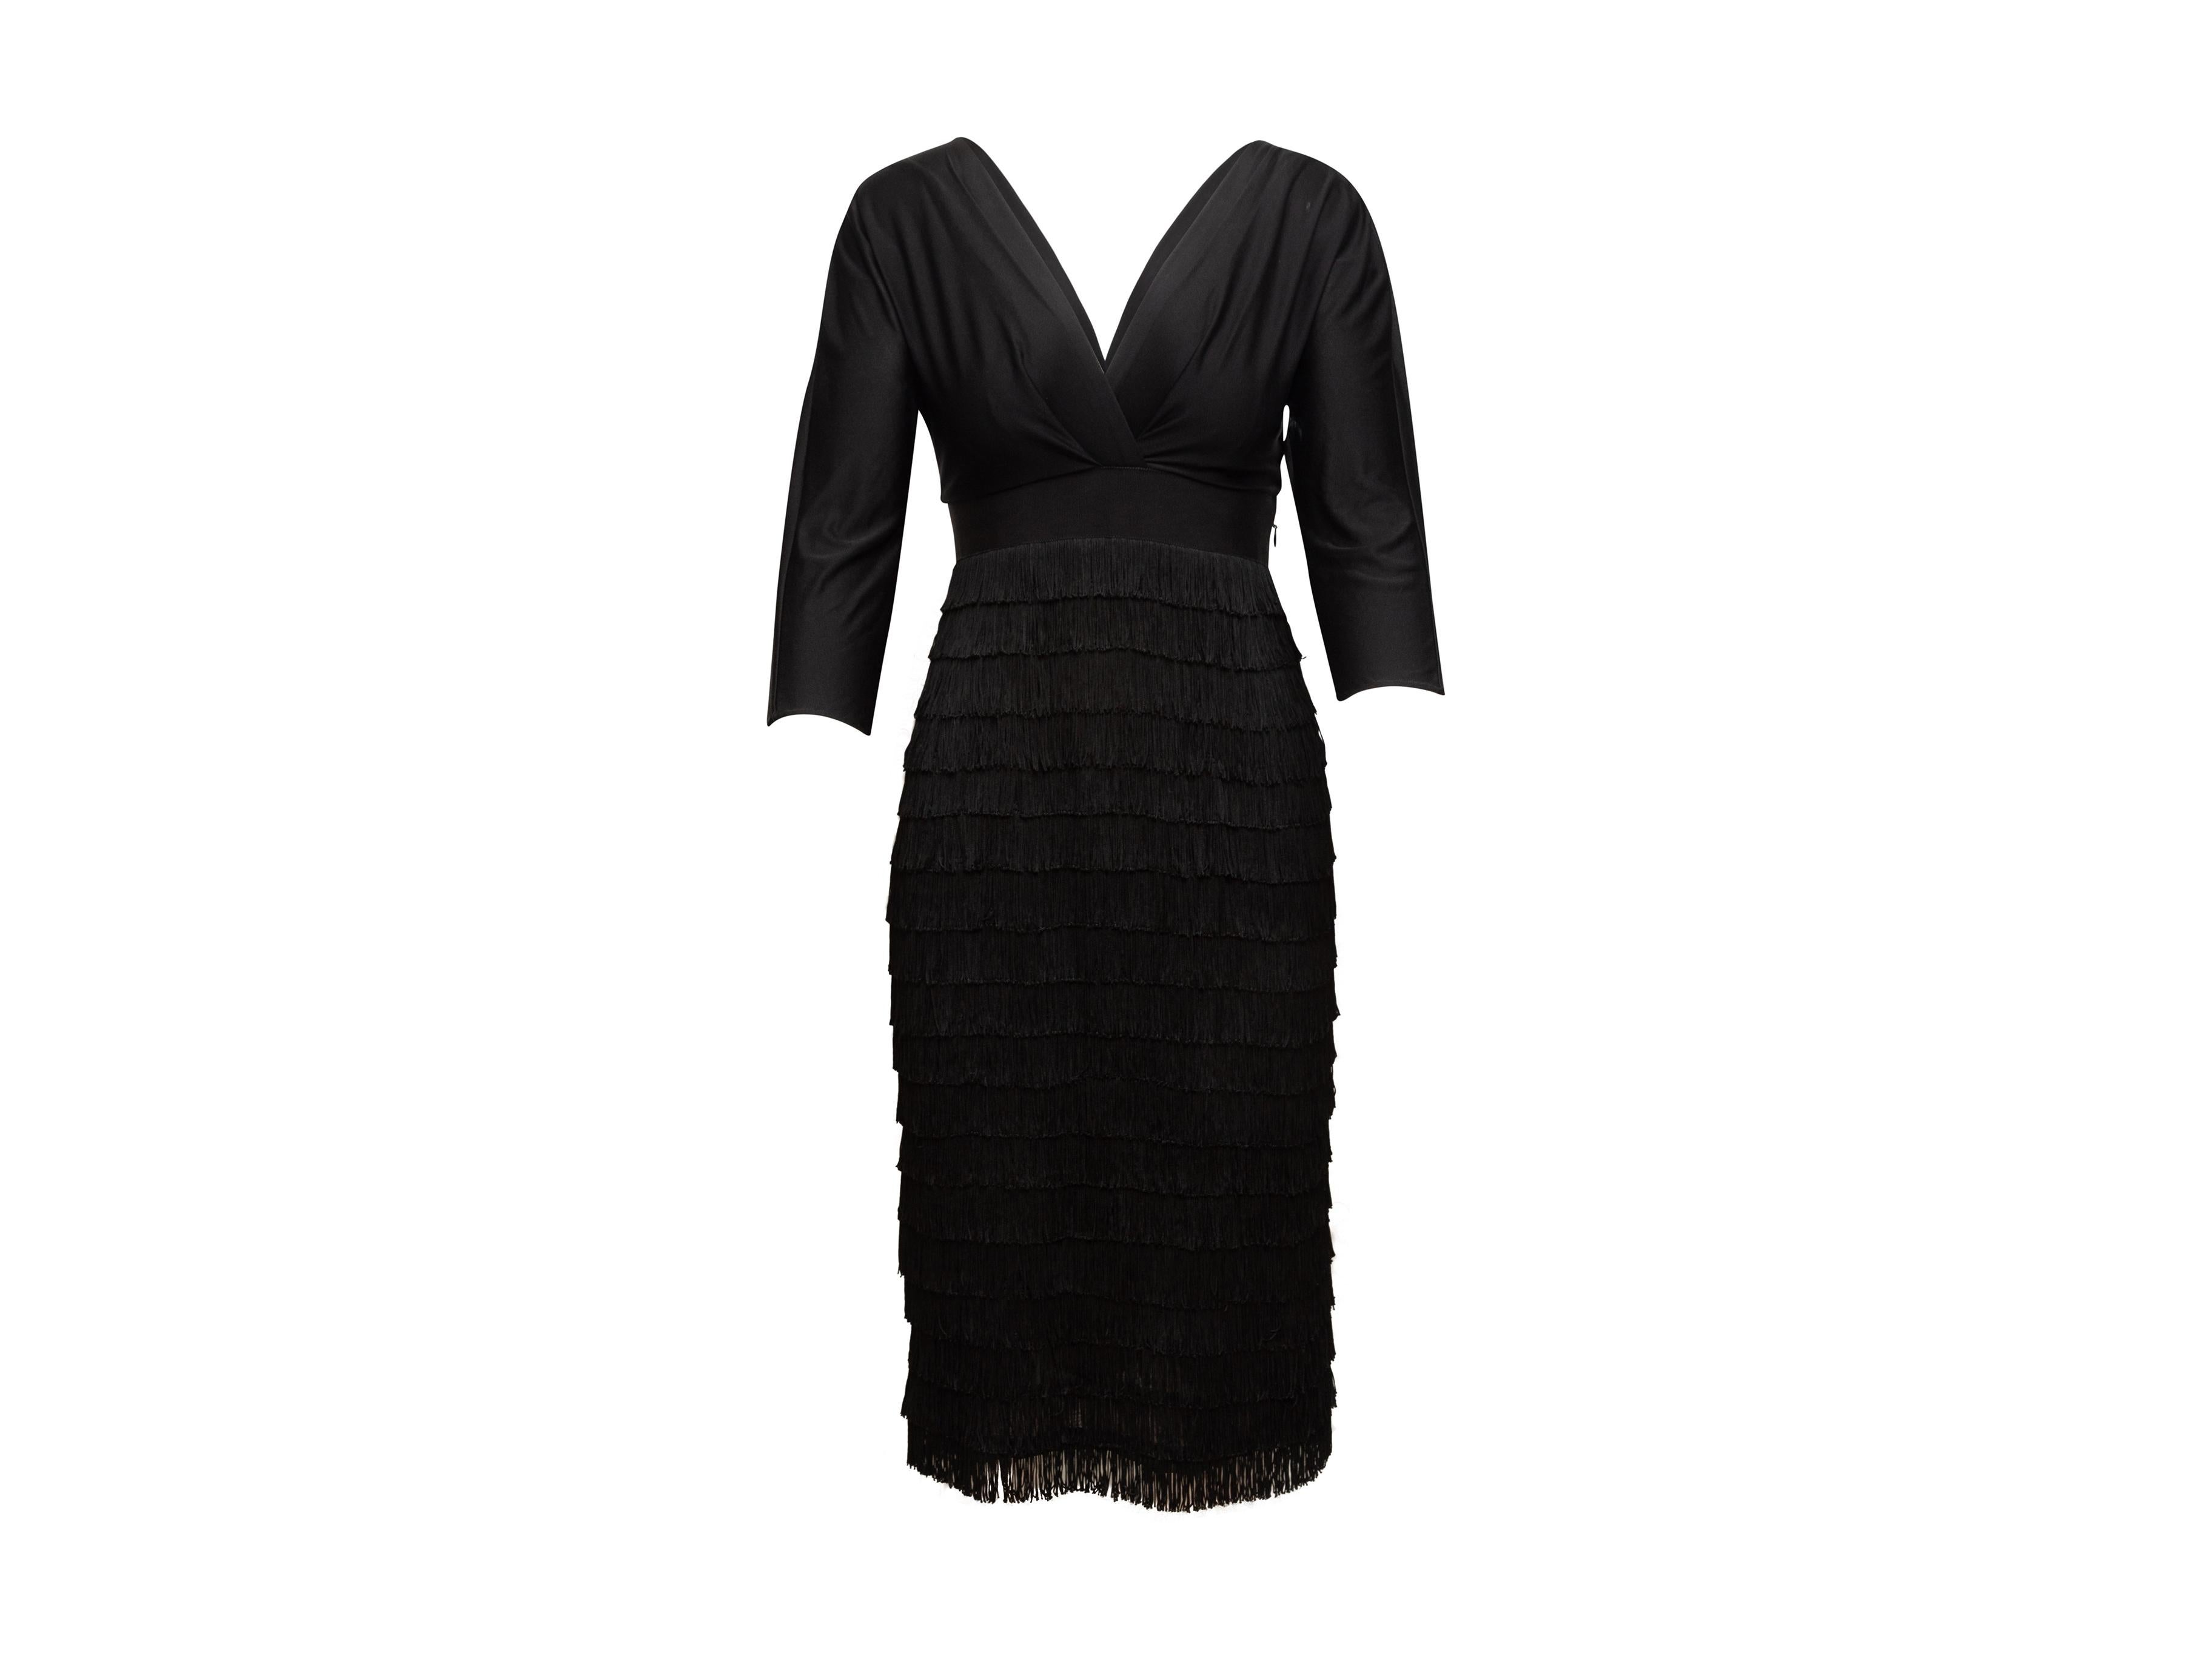 Product details: Black silk-blend three-quarter sleeve dress by Alberta Ferretti. Surplice neckline. Tiered fringe skirt. Zip closure at side. 30